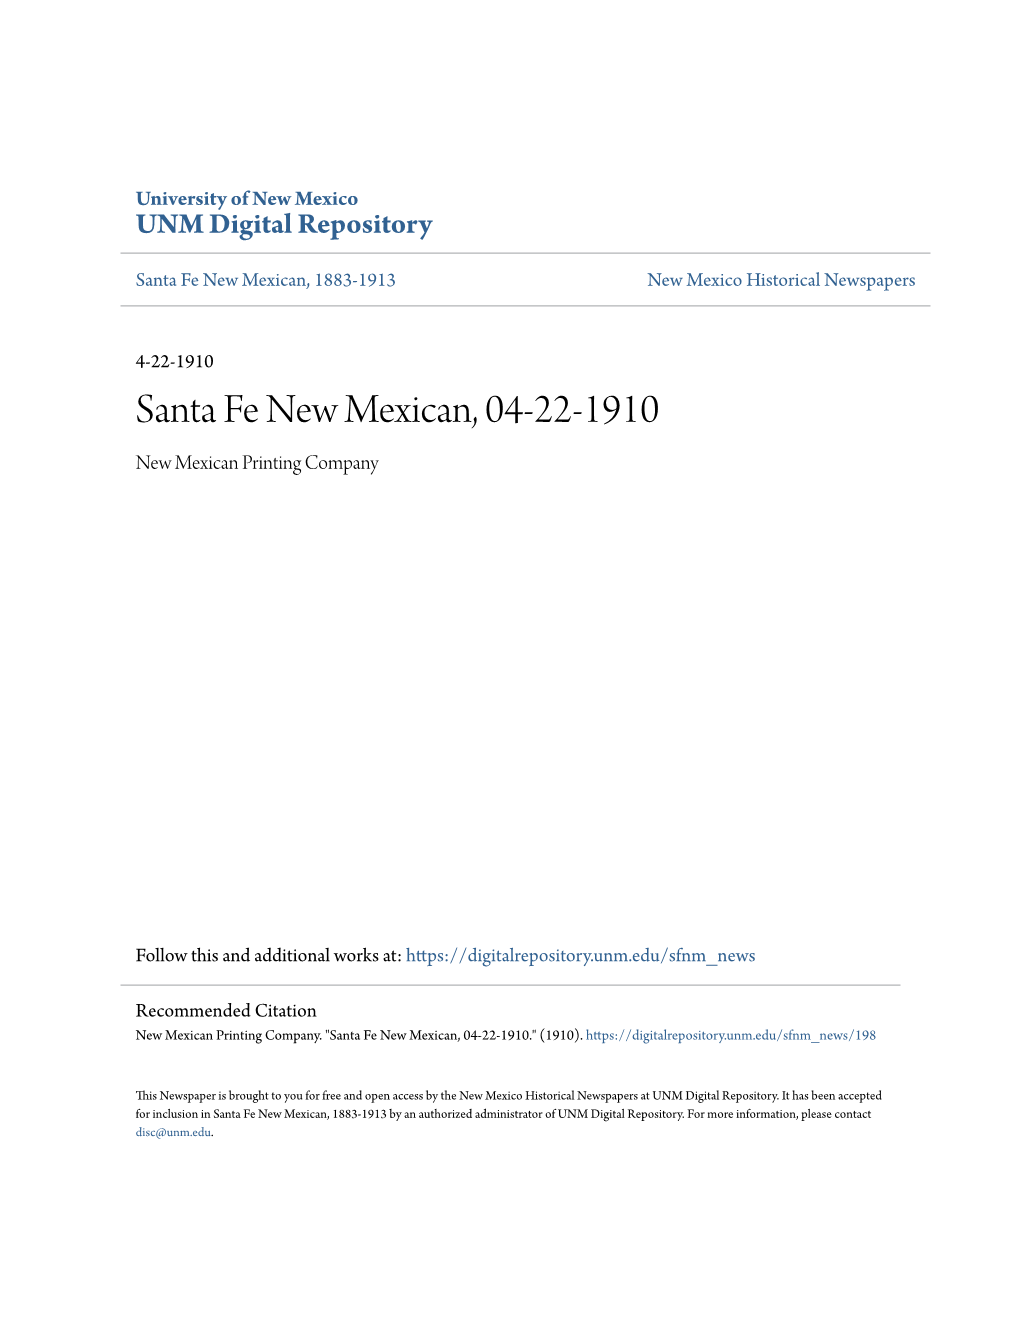 Santa Fe New Mexican, 04-22-1910 New Mexican Printing Company